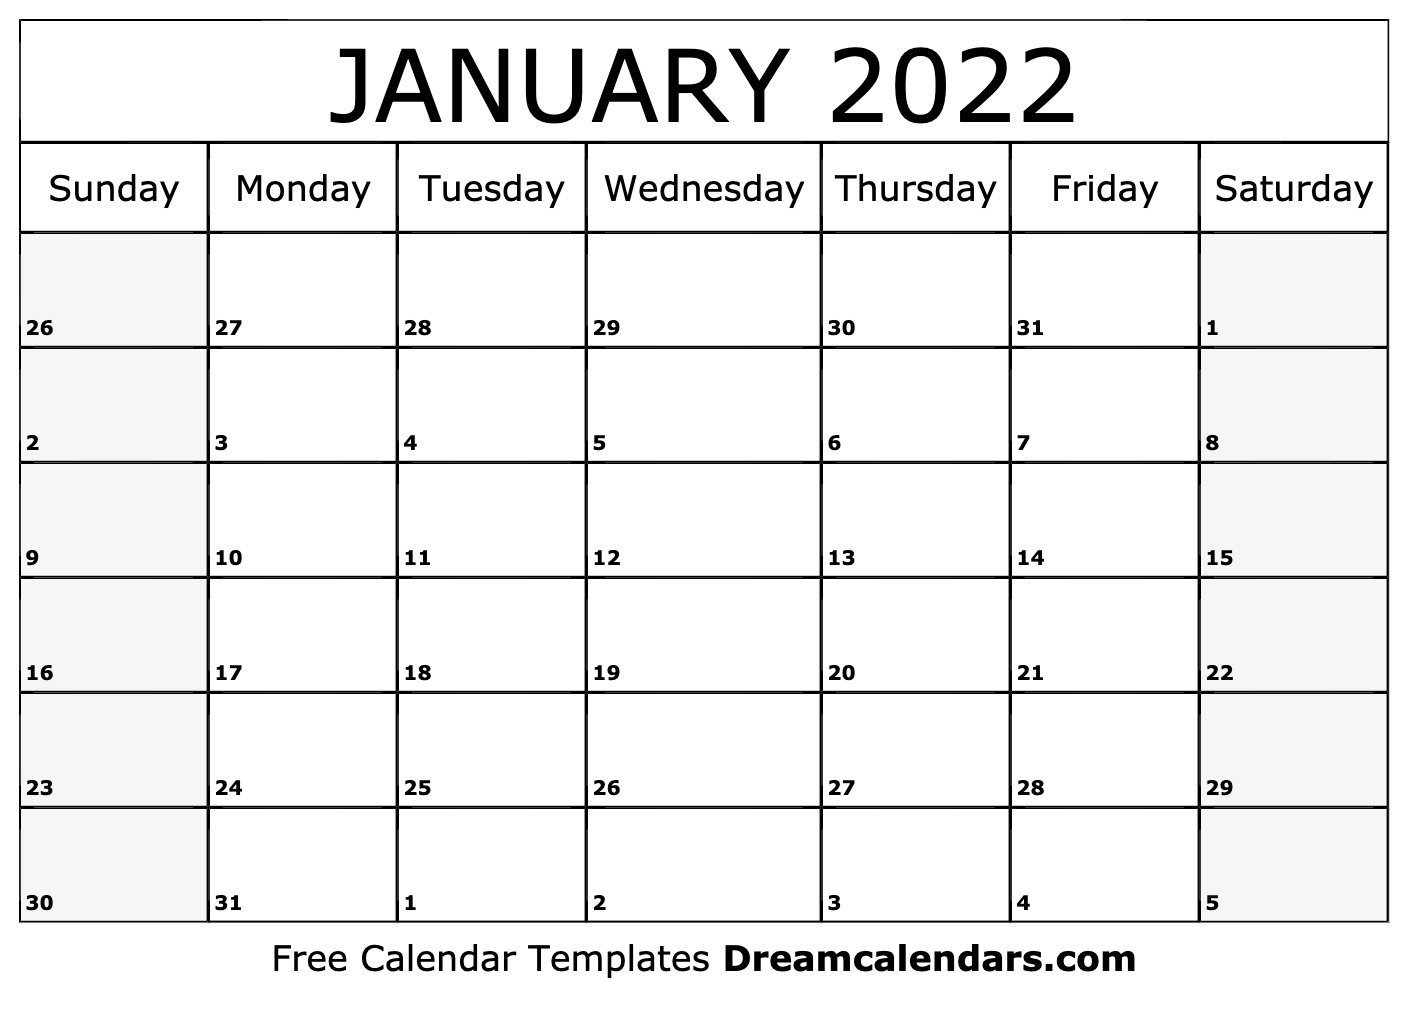 Get Calendar 2022 January Calendar